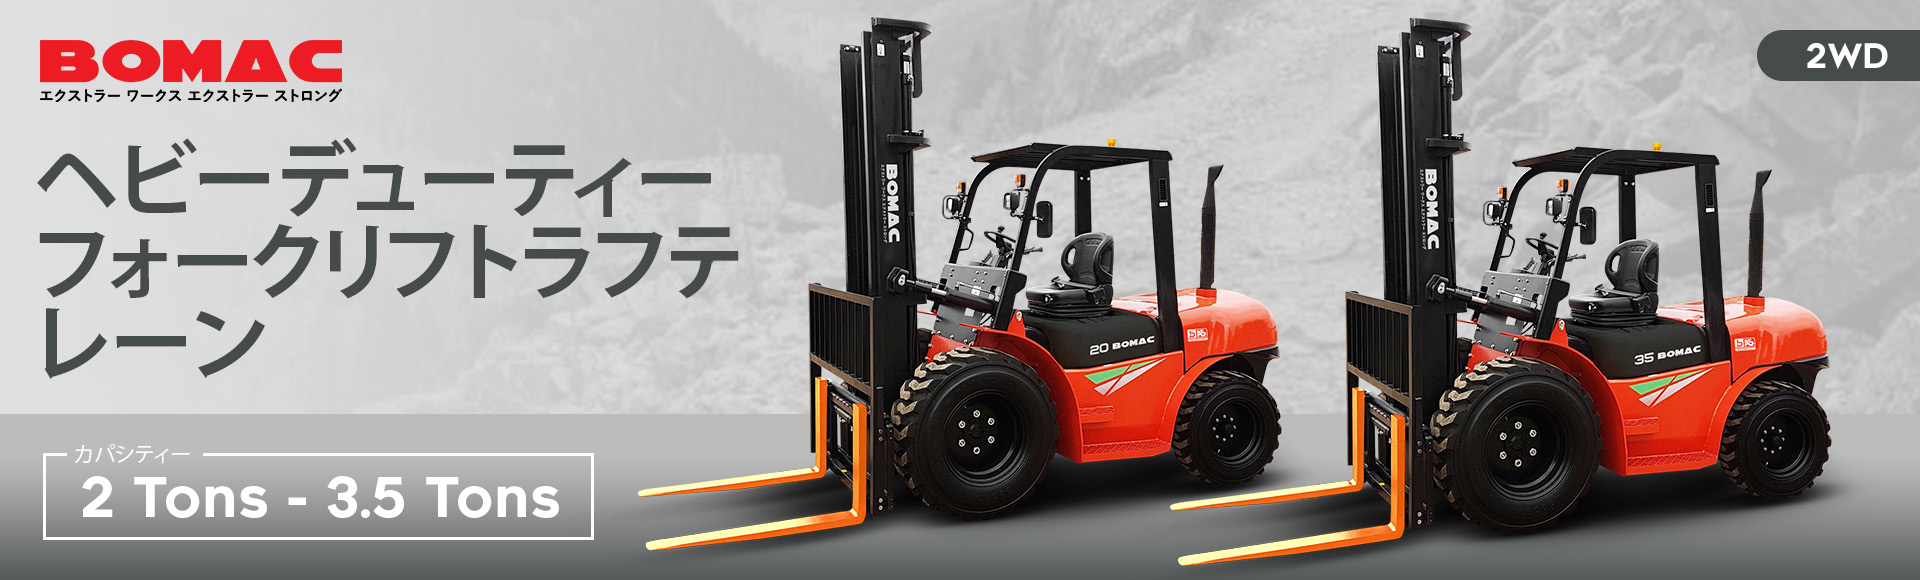 Banner Bomac Forklift Rough Terrain 2 TON - 3.5 TON Japan Ver 2WD